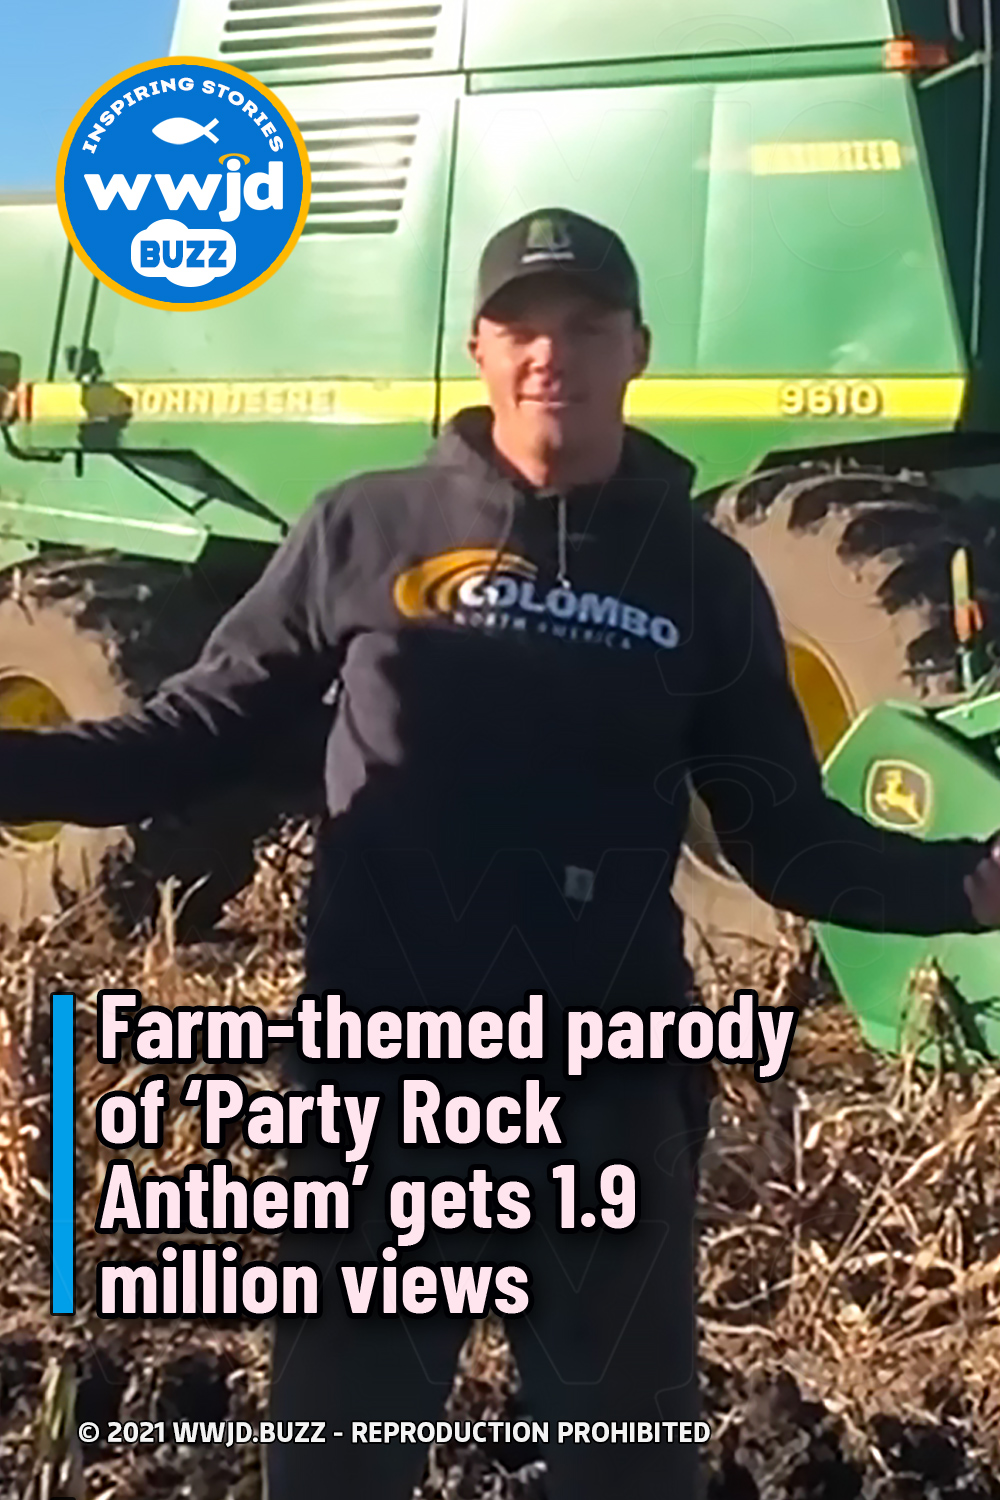 Farm-themed parody of ‘Party Rock Anthem’ gets 1.9 million views